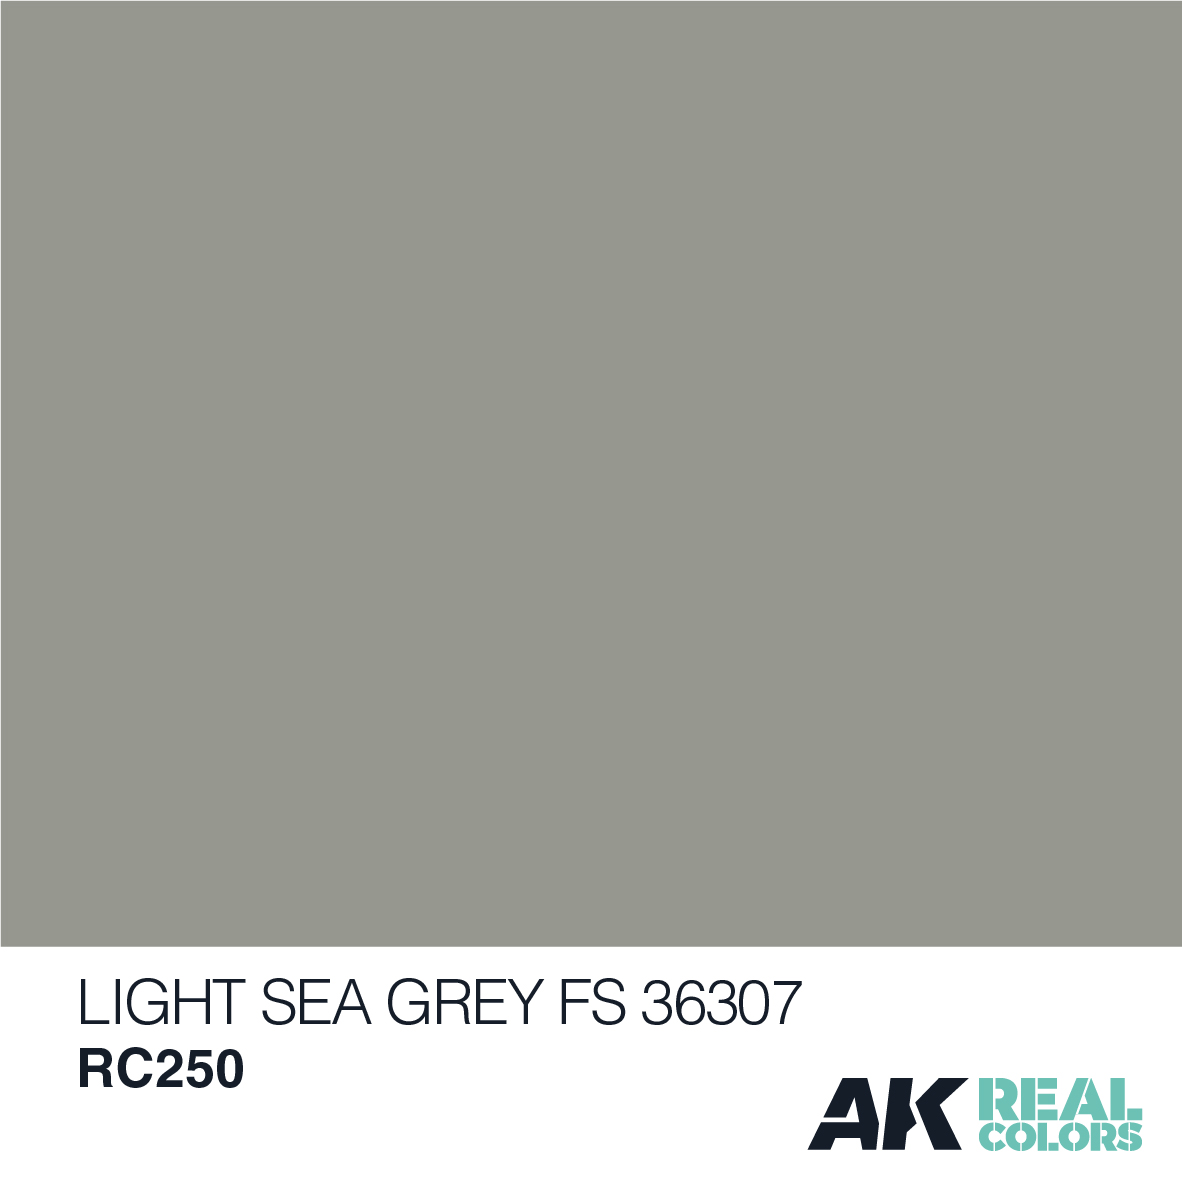 Light Sea Grey FS 36307